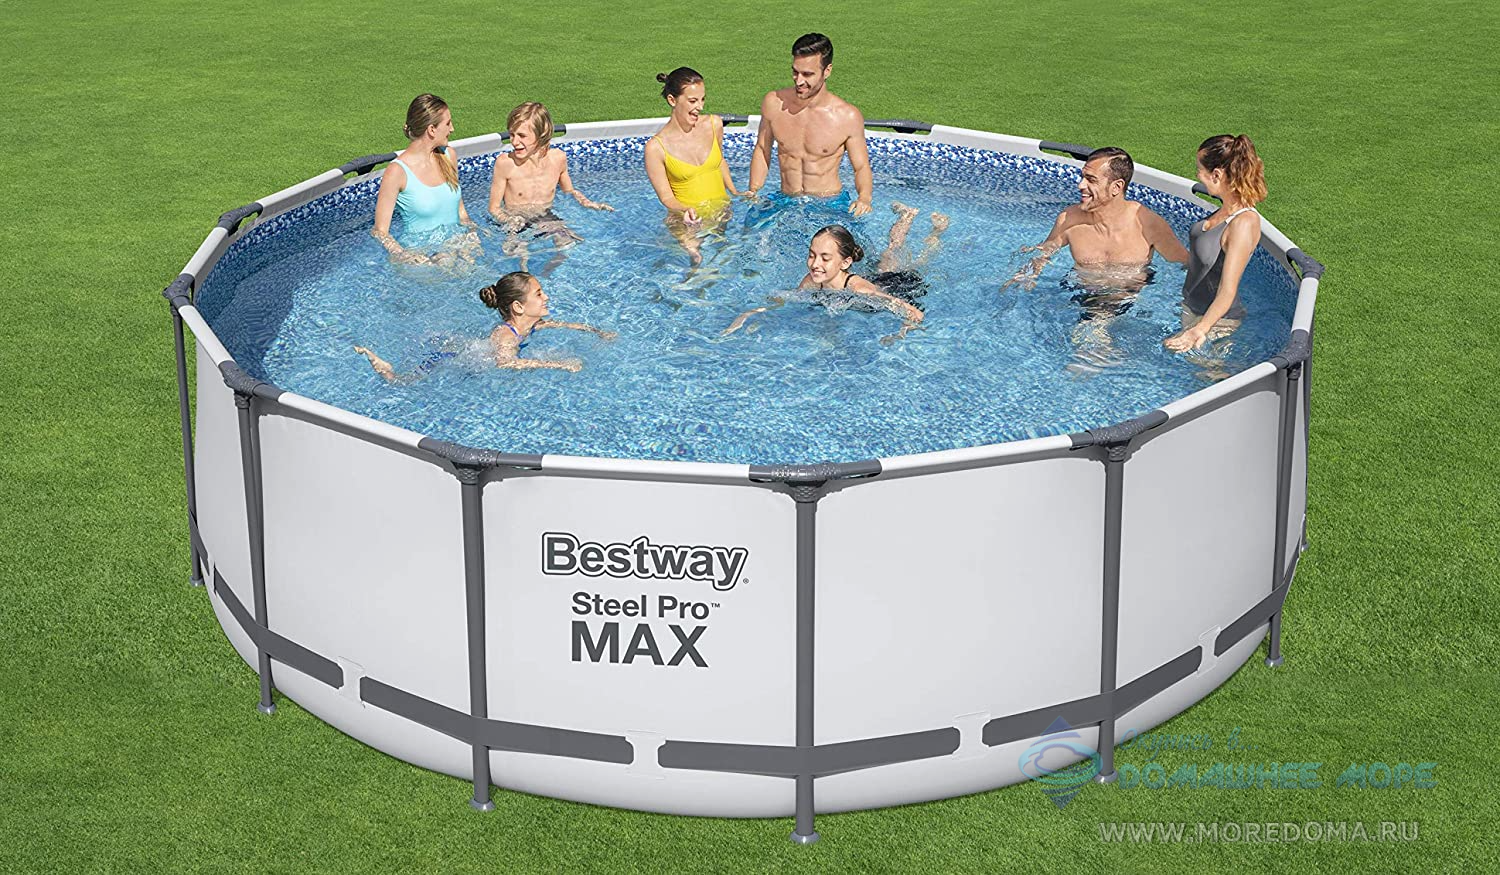 56438 Каркасный бассейн Bestway Steel Pro Max (круг) 4.57 х 1.22 м ; артикул 56438 диаметр 4.57 высота 1.22  